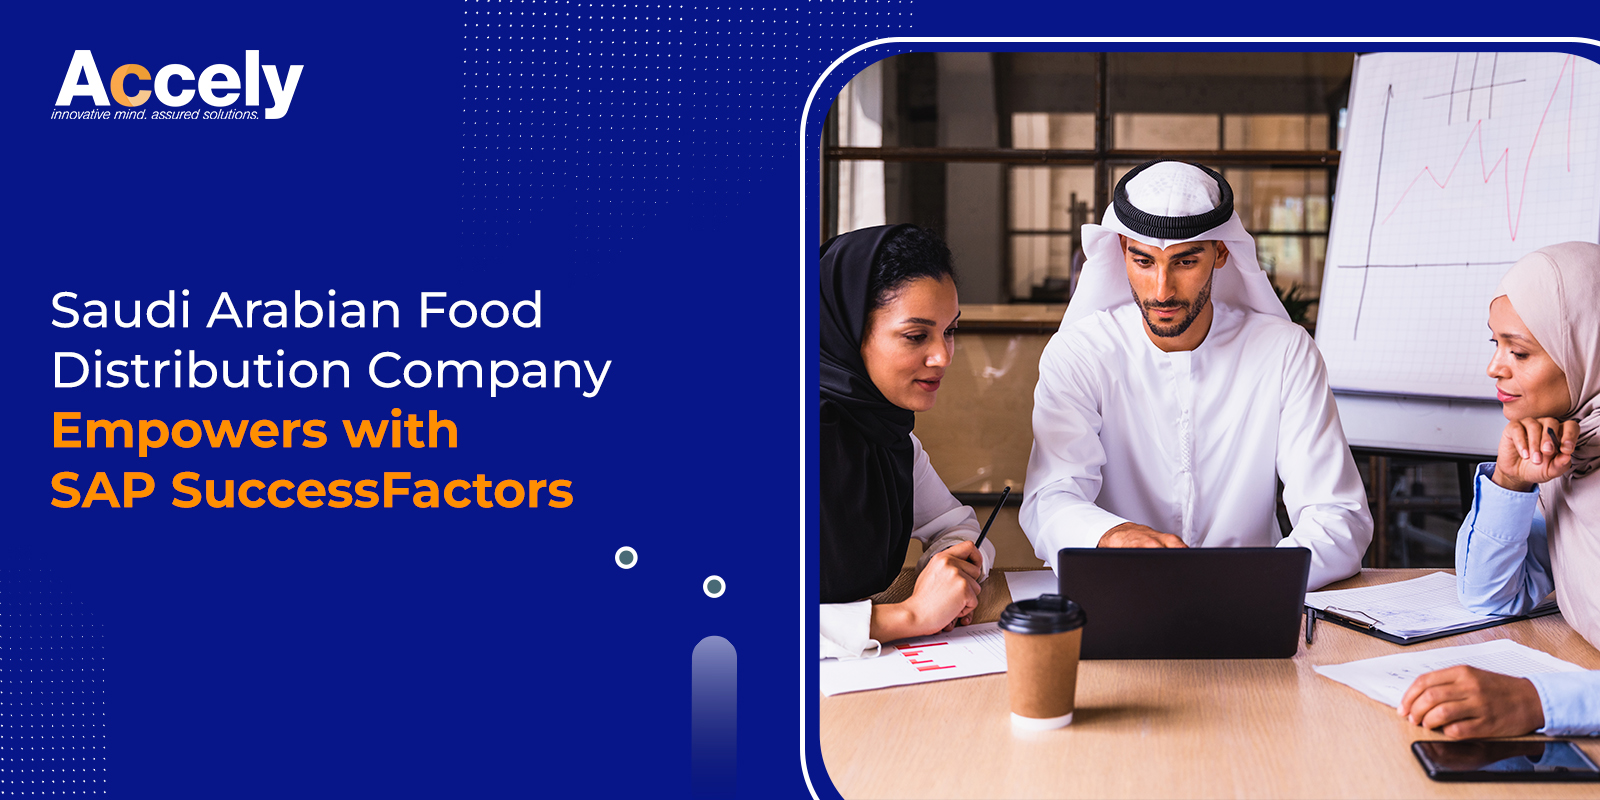 Saudi Arabian Food Distribution Company Empowers with SAP SuccessFactors